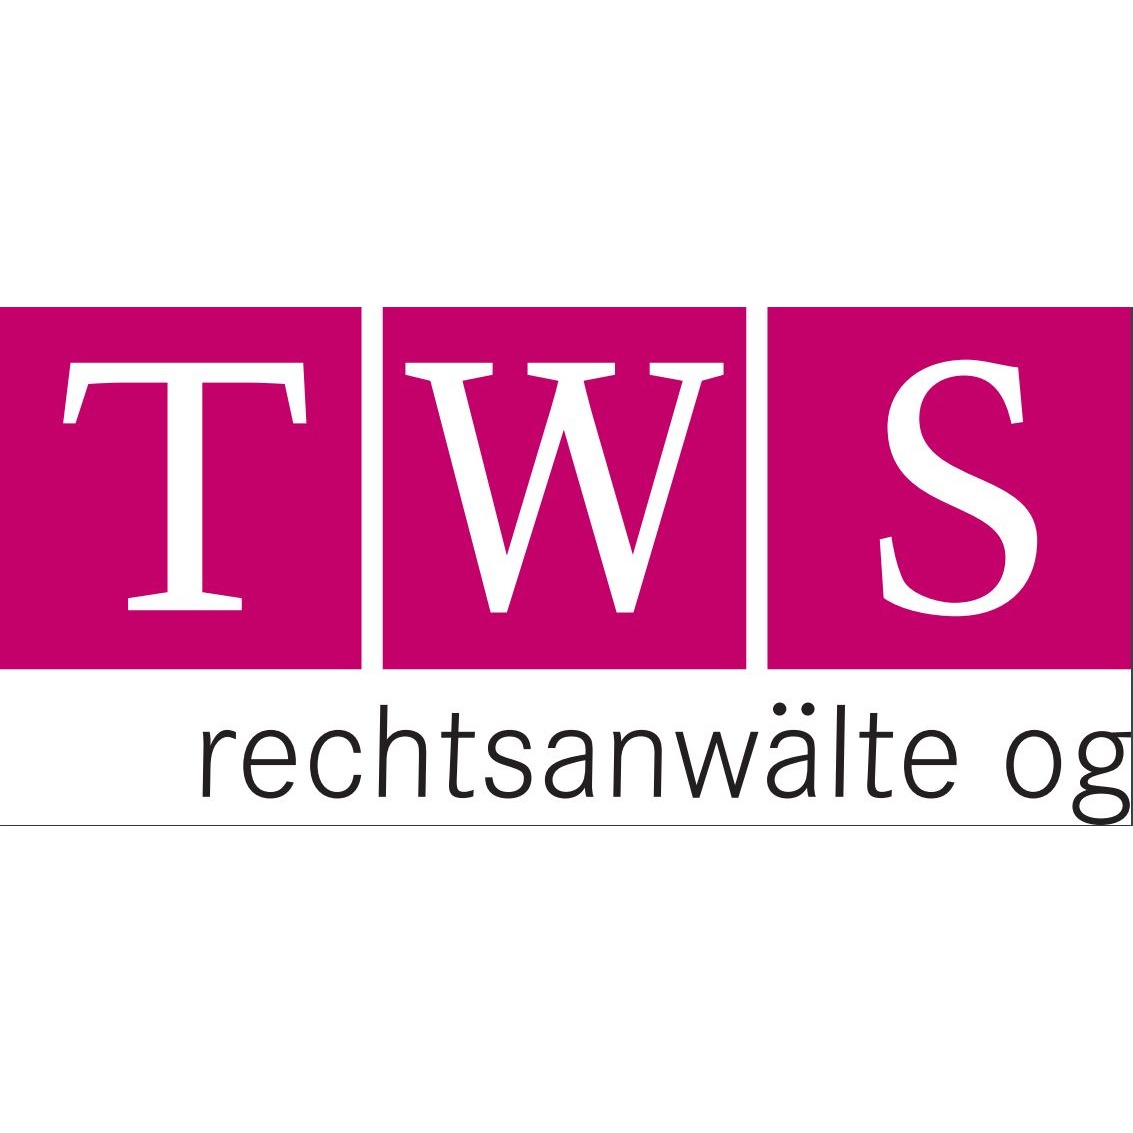 TWS rechtsanwälte og Logo